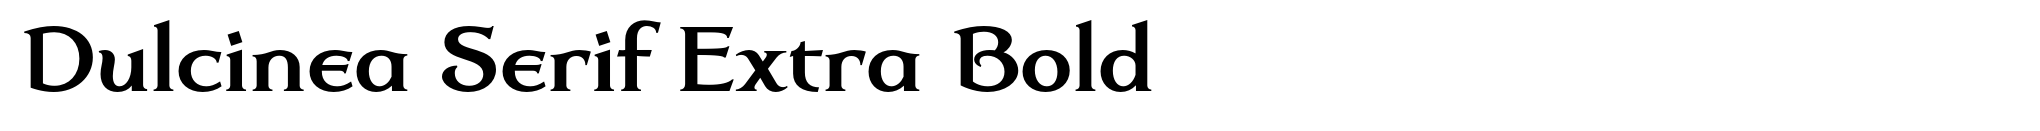 Dulcinea Serif Extra Bold image